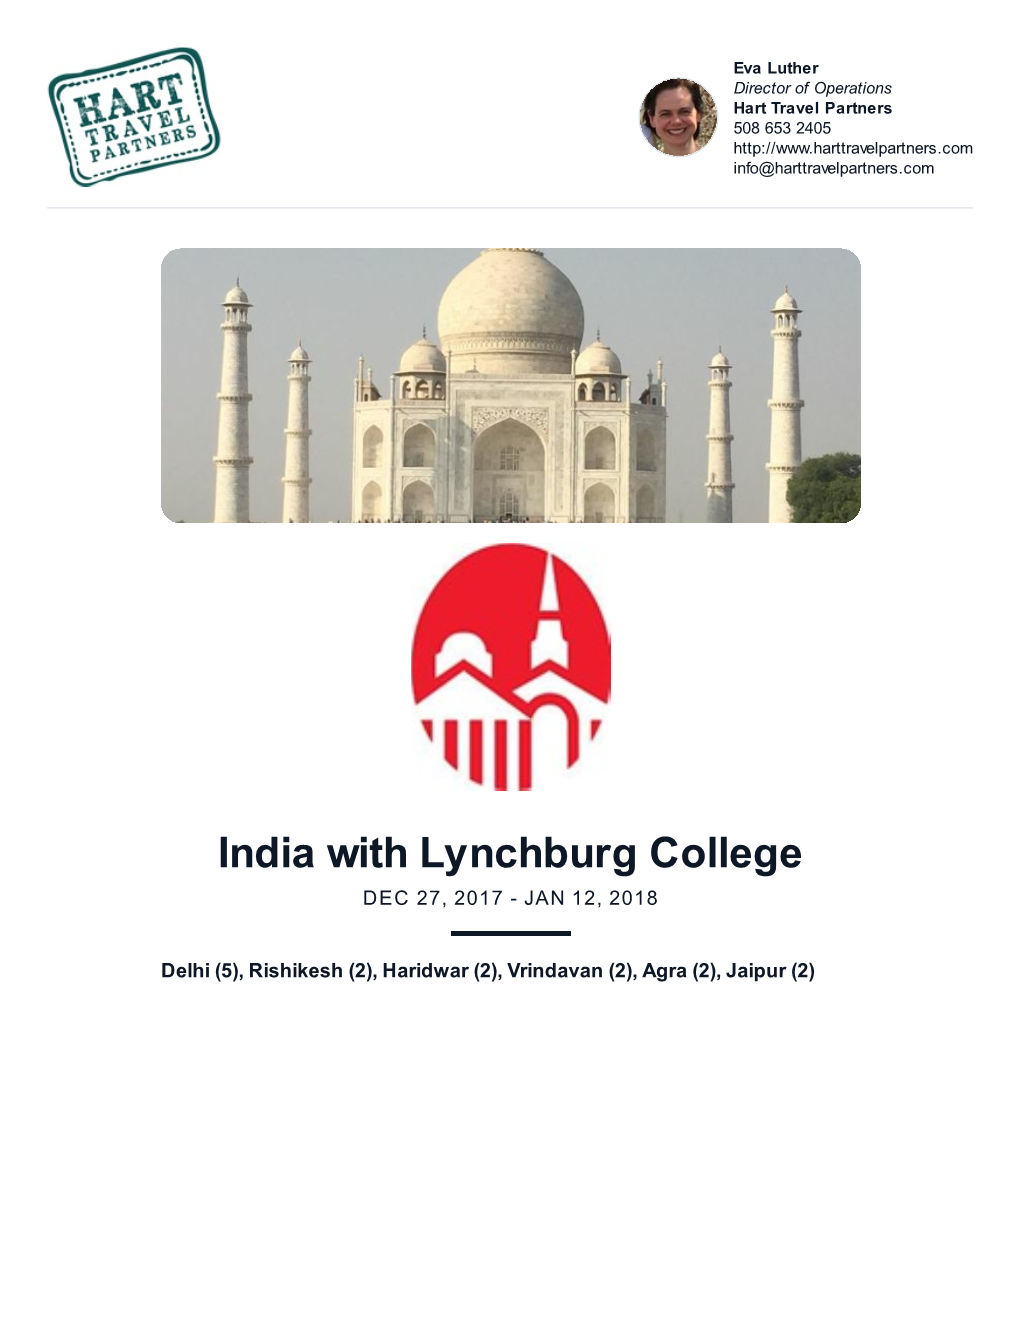 India with Lynchburg College DEC 27, 2017 - JAN 12, 2018